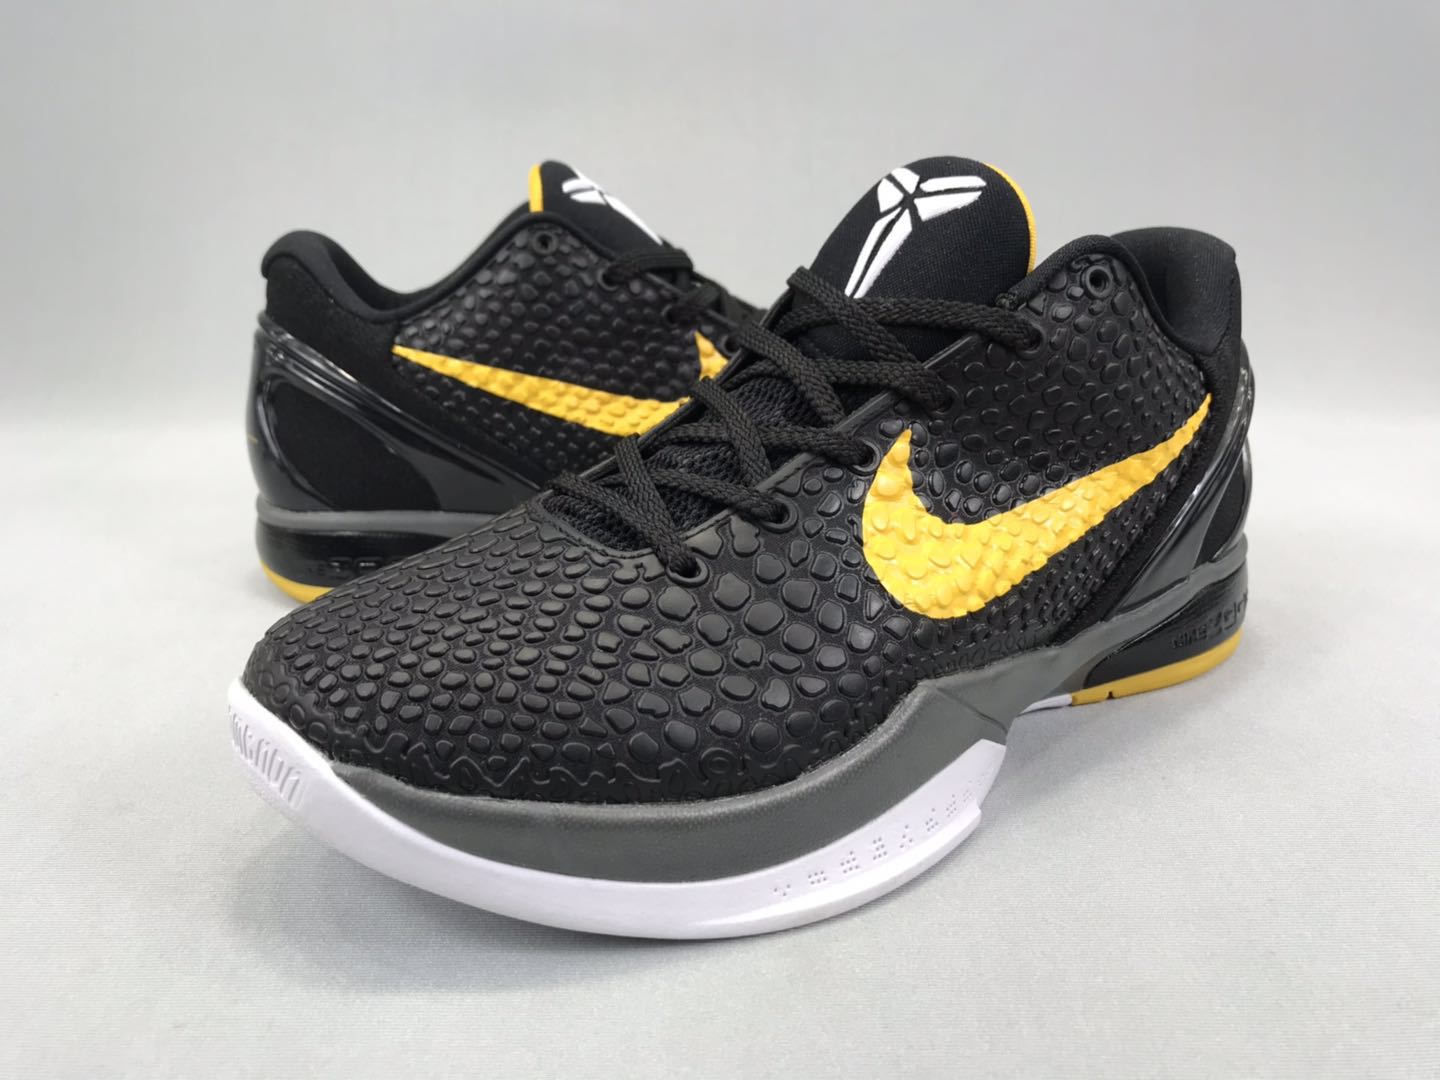 New Nike Kobe Bryant VIII Black Yellow Shoes